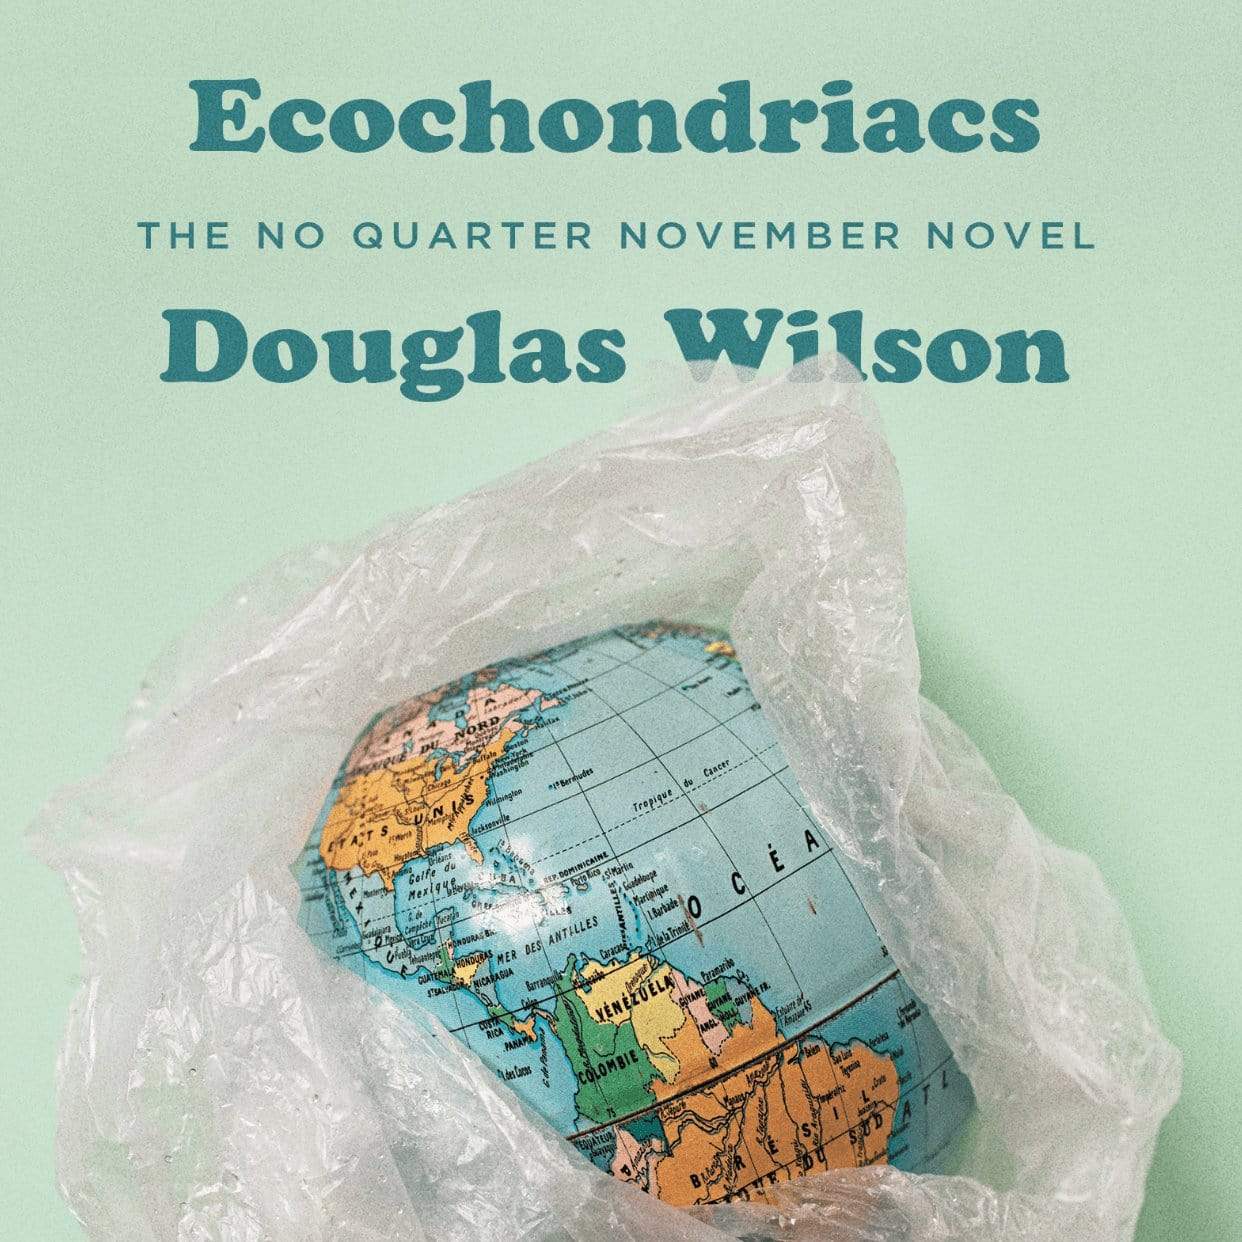 Ecochondriacs: The No Quarter November Novel